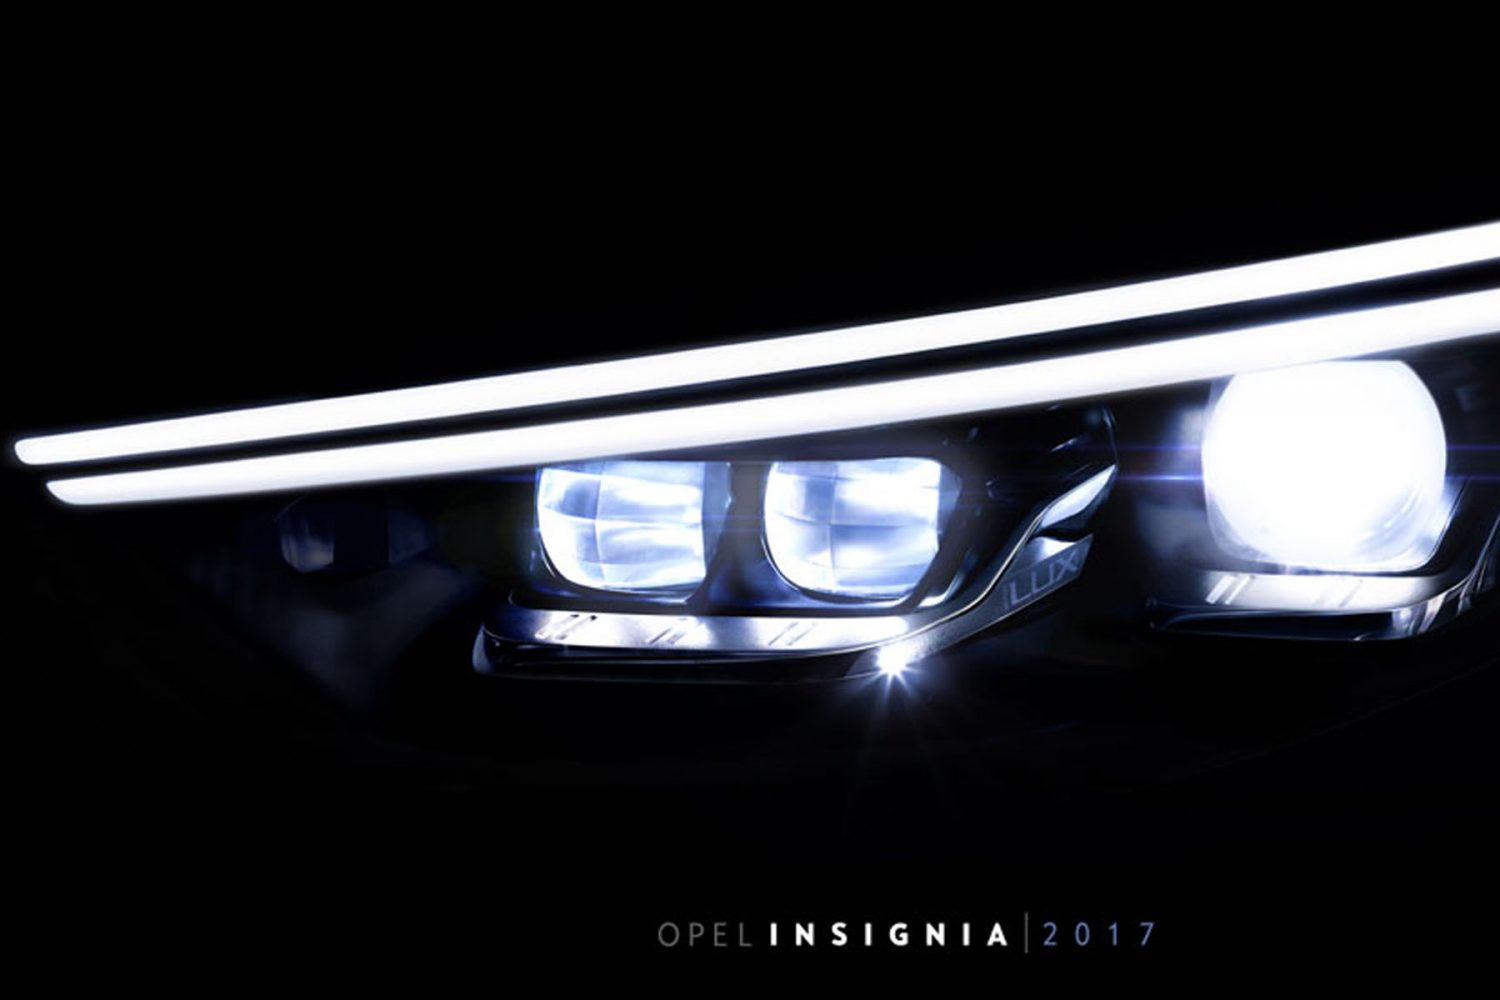 Opel Insignia IntelliLux LED® matrix light